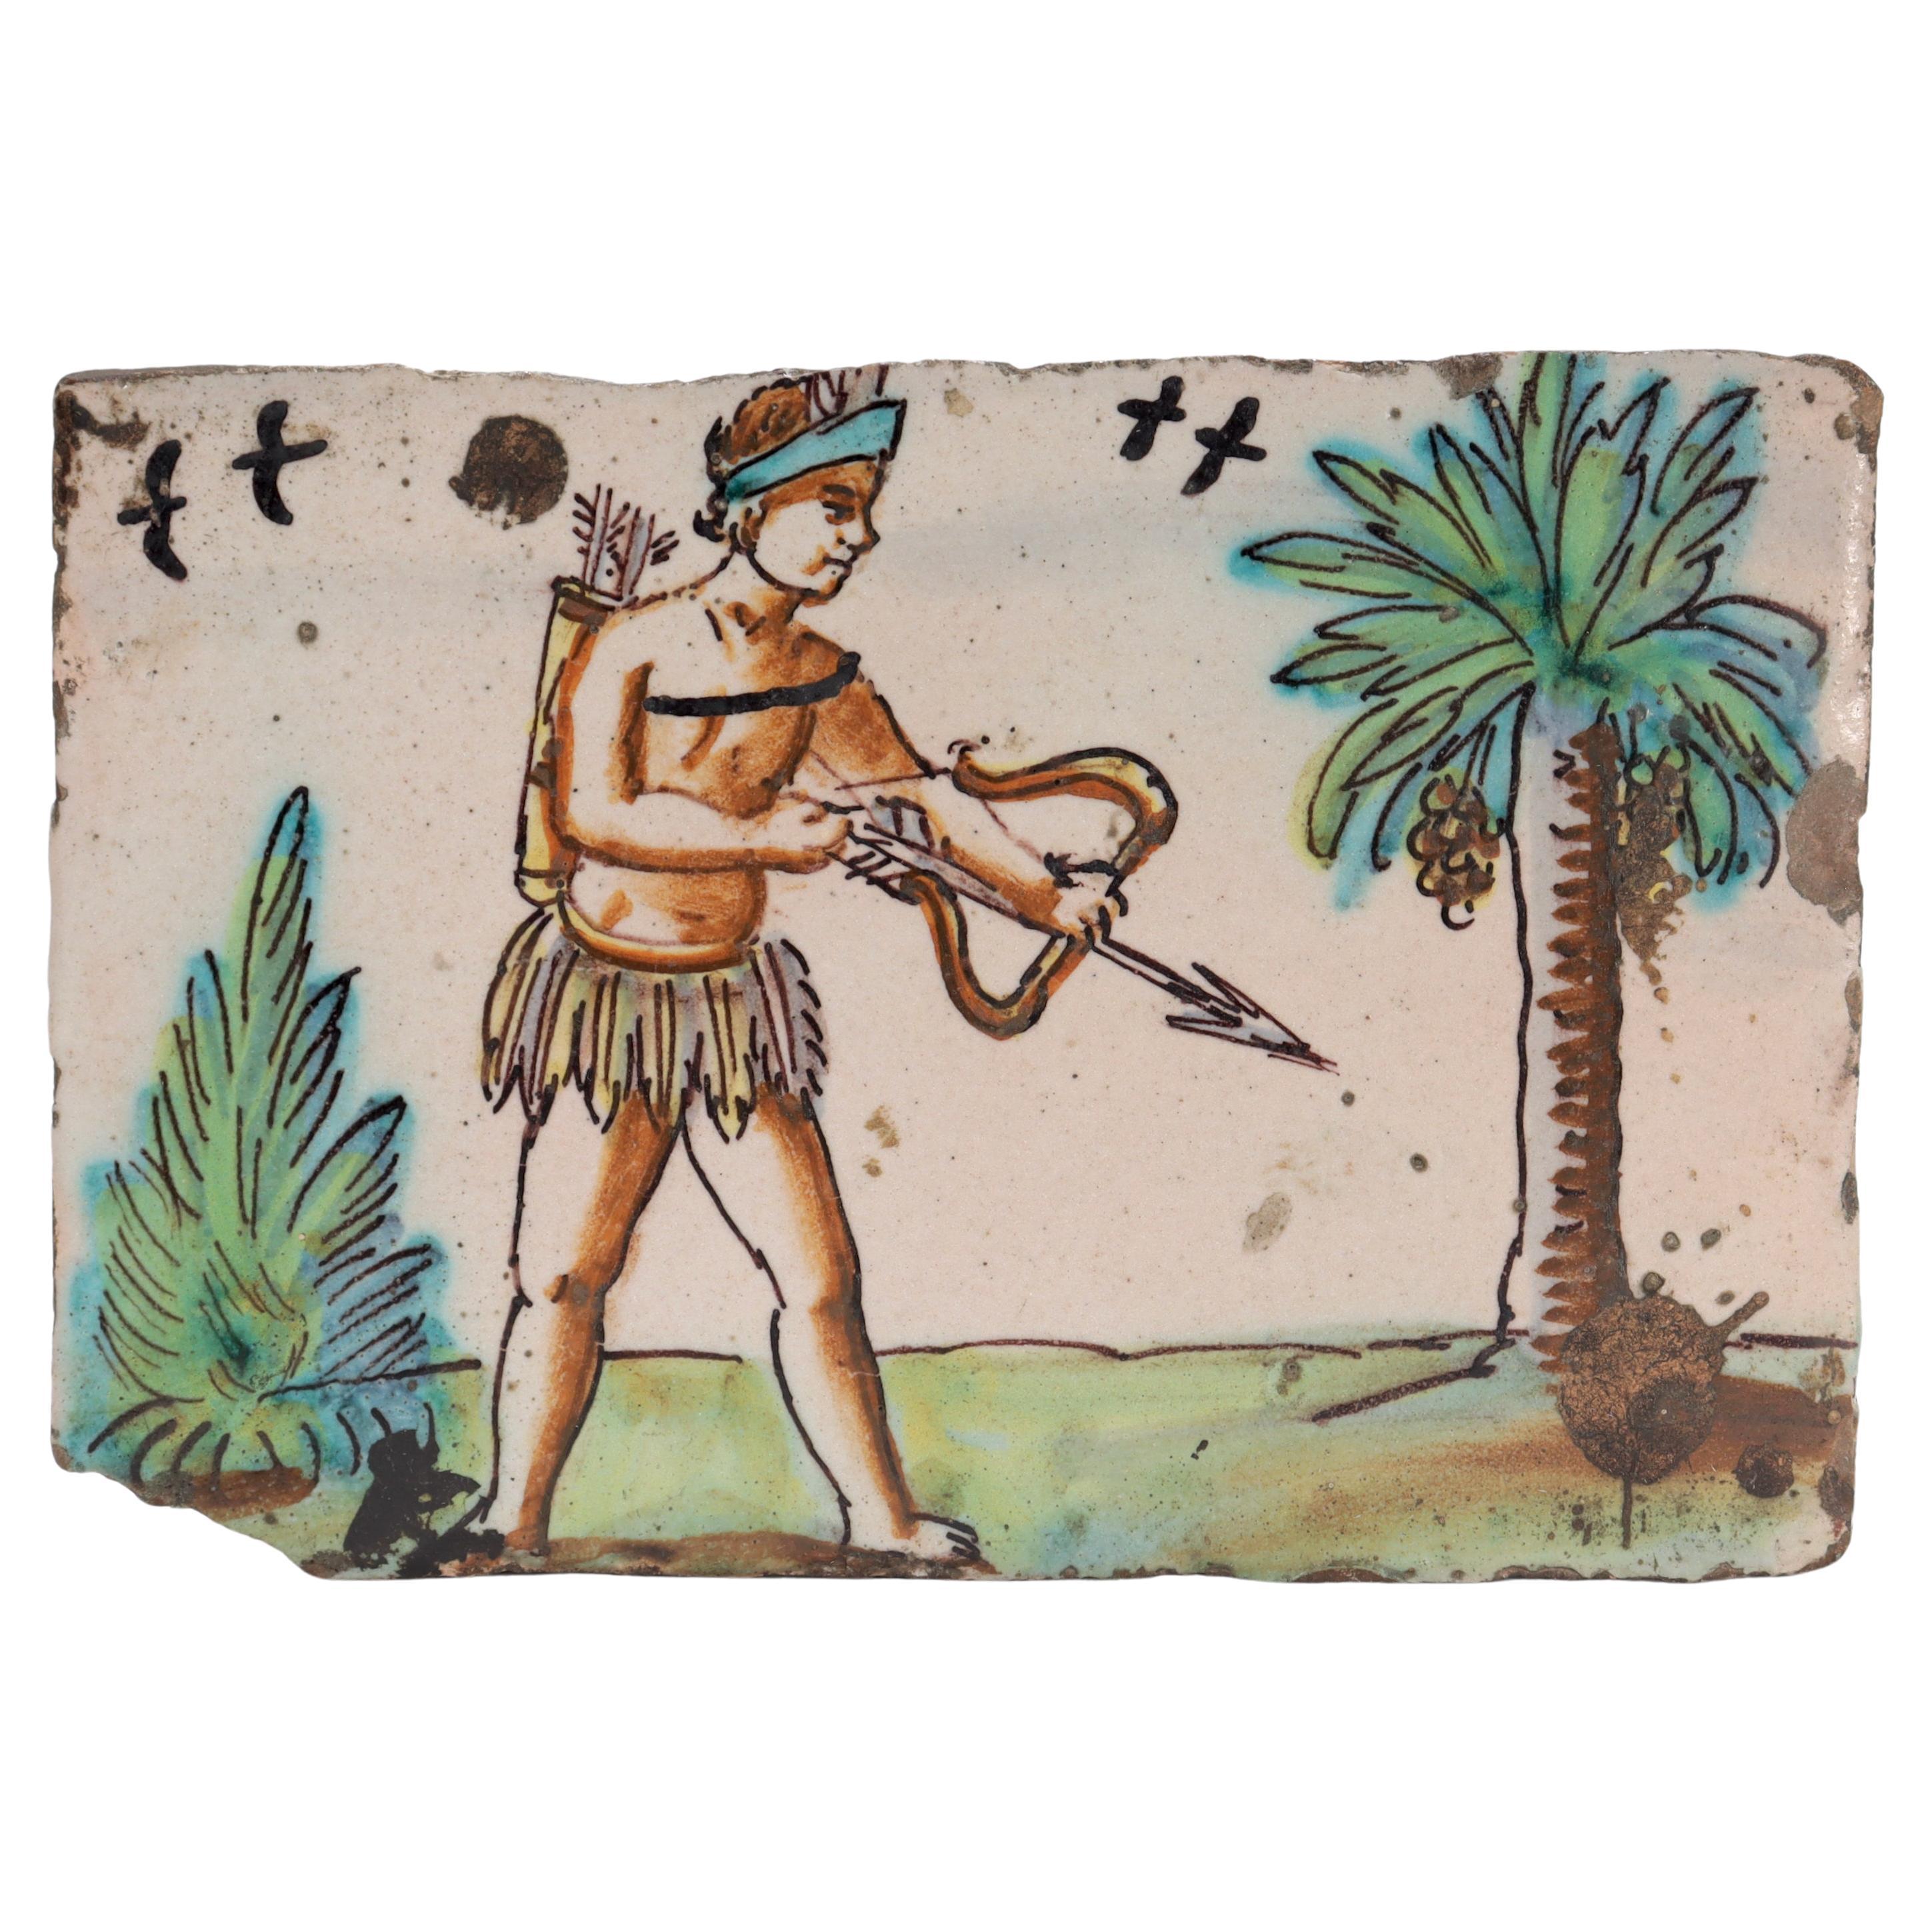 Antique 18th Century Dutch Terra Cotta Pottery Tile depicting a Native American For Sale